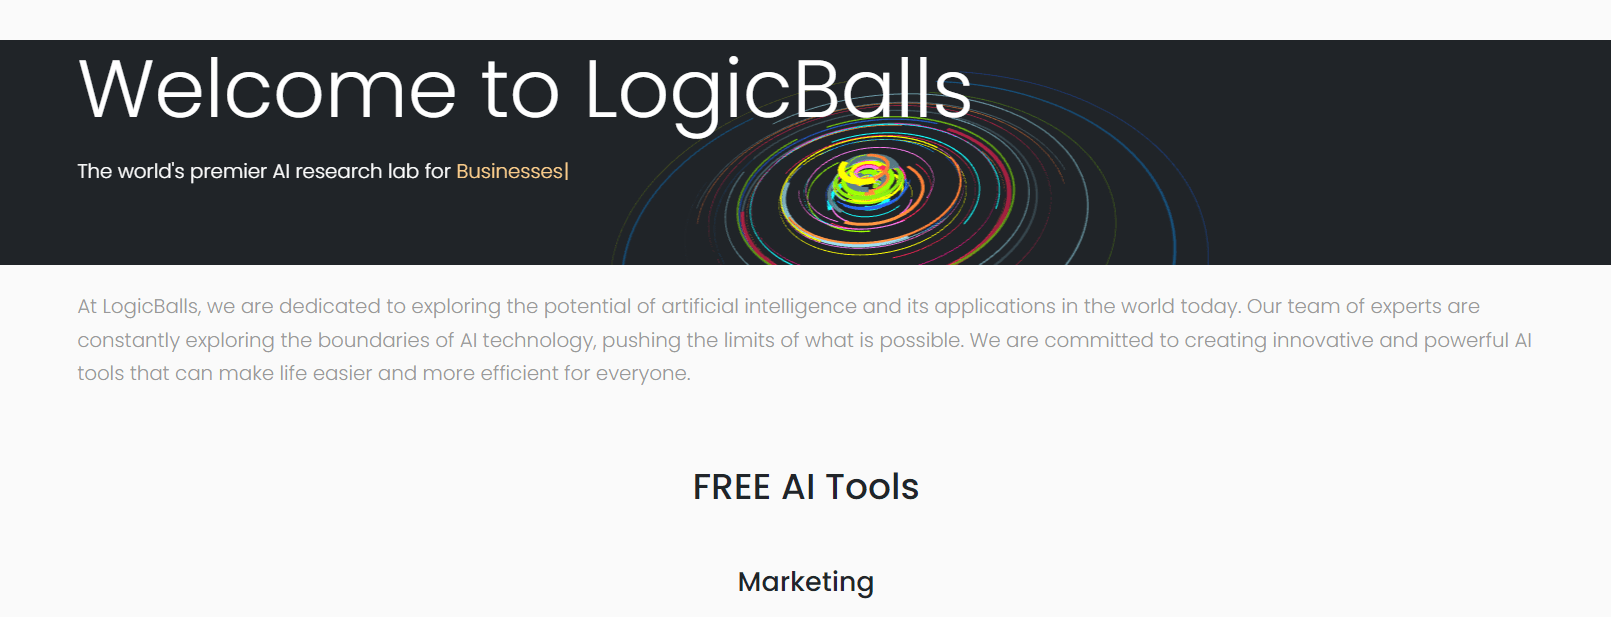 Logicballs